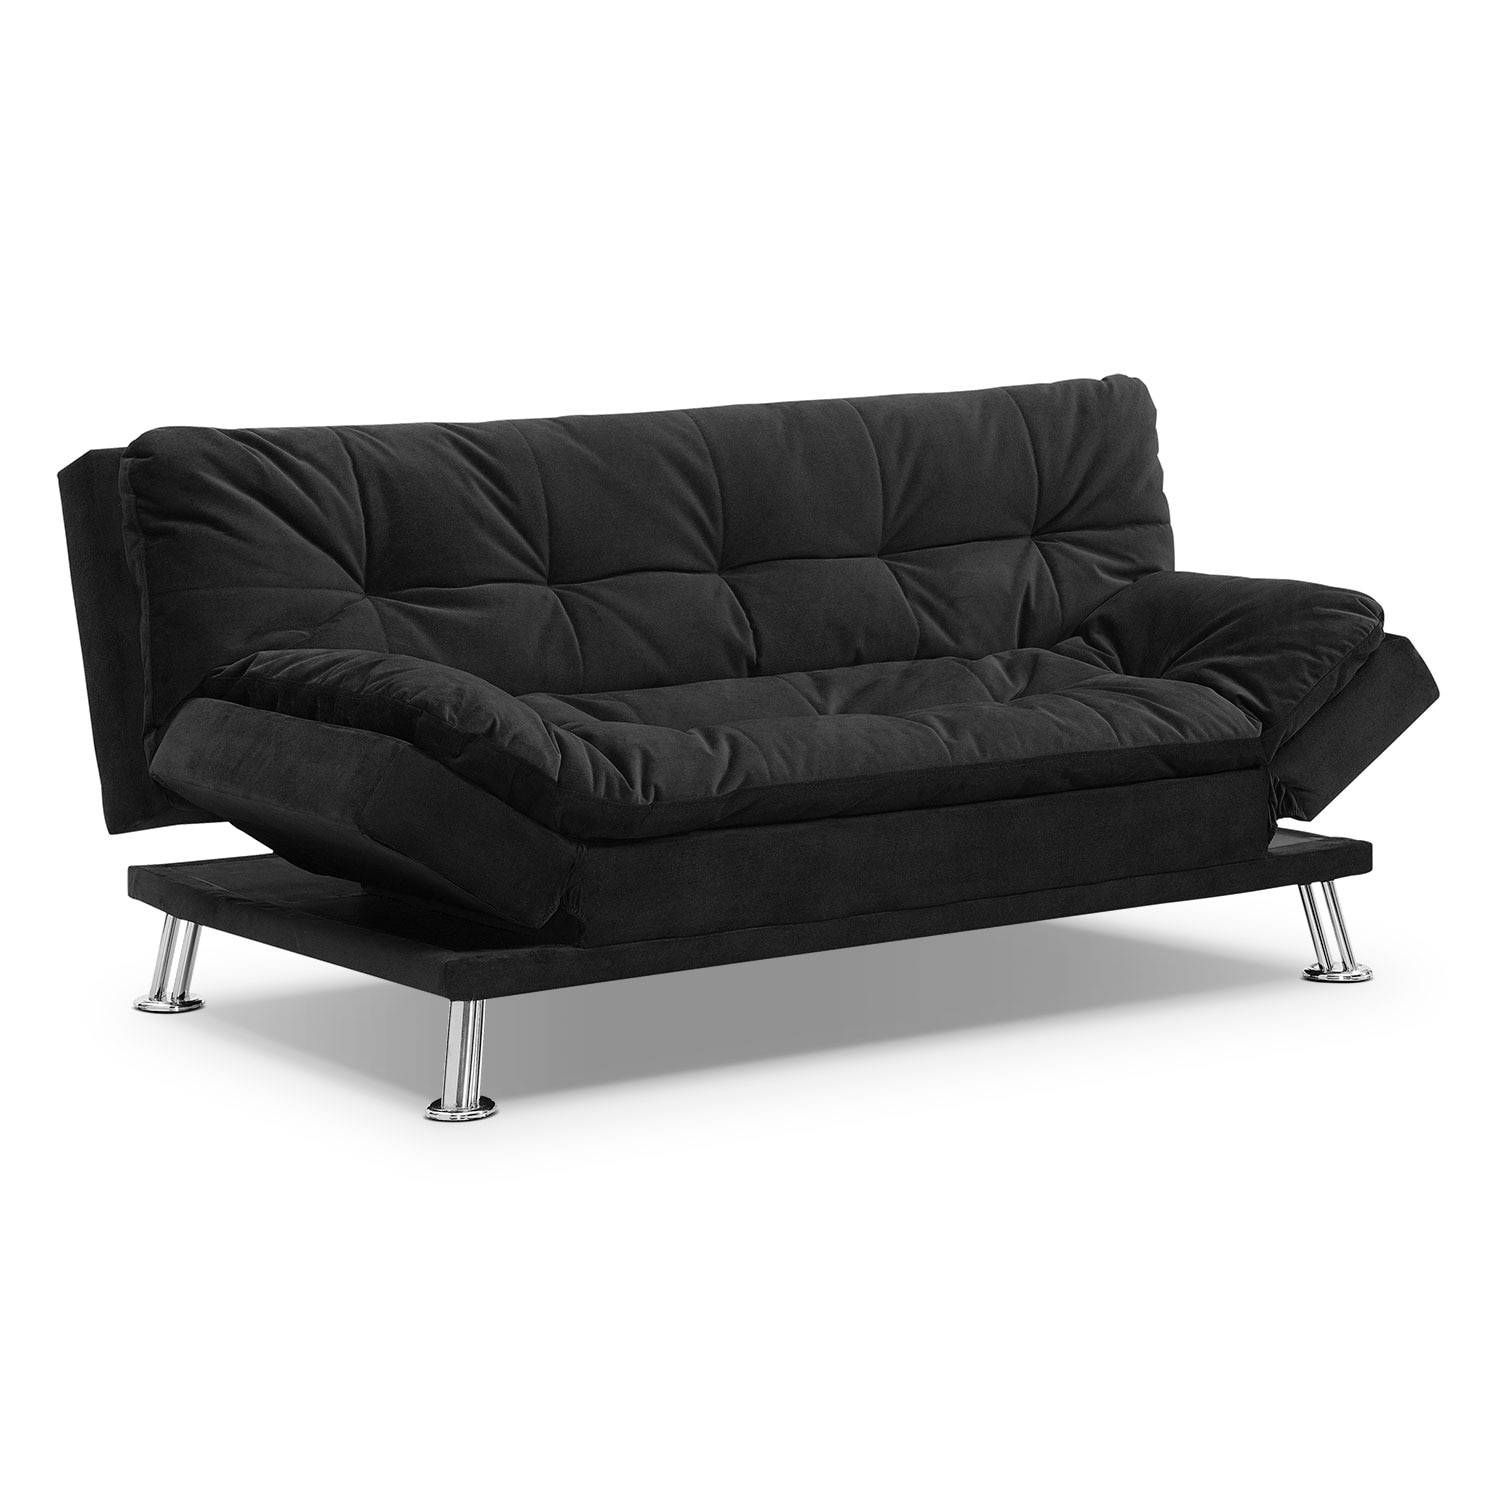 Waltz Futon Sofa Bed – Black | Value City Furniture For Leather Fouton Sofas (View 7 of 15)